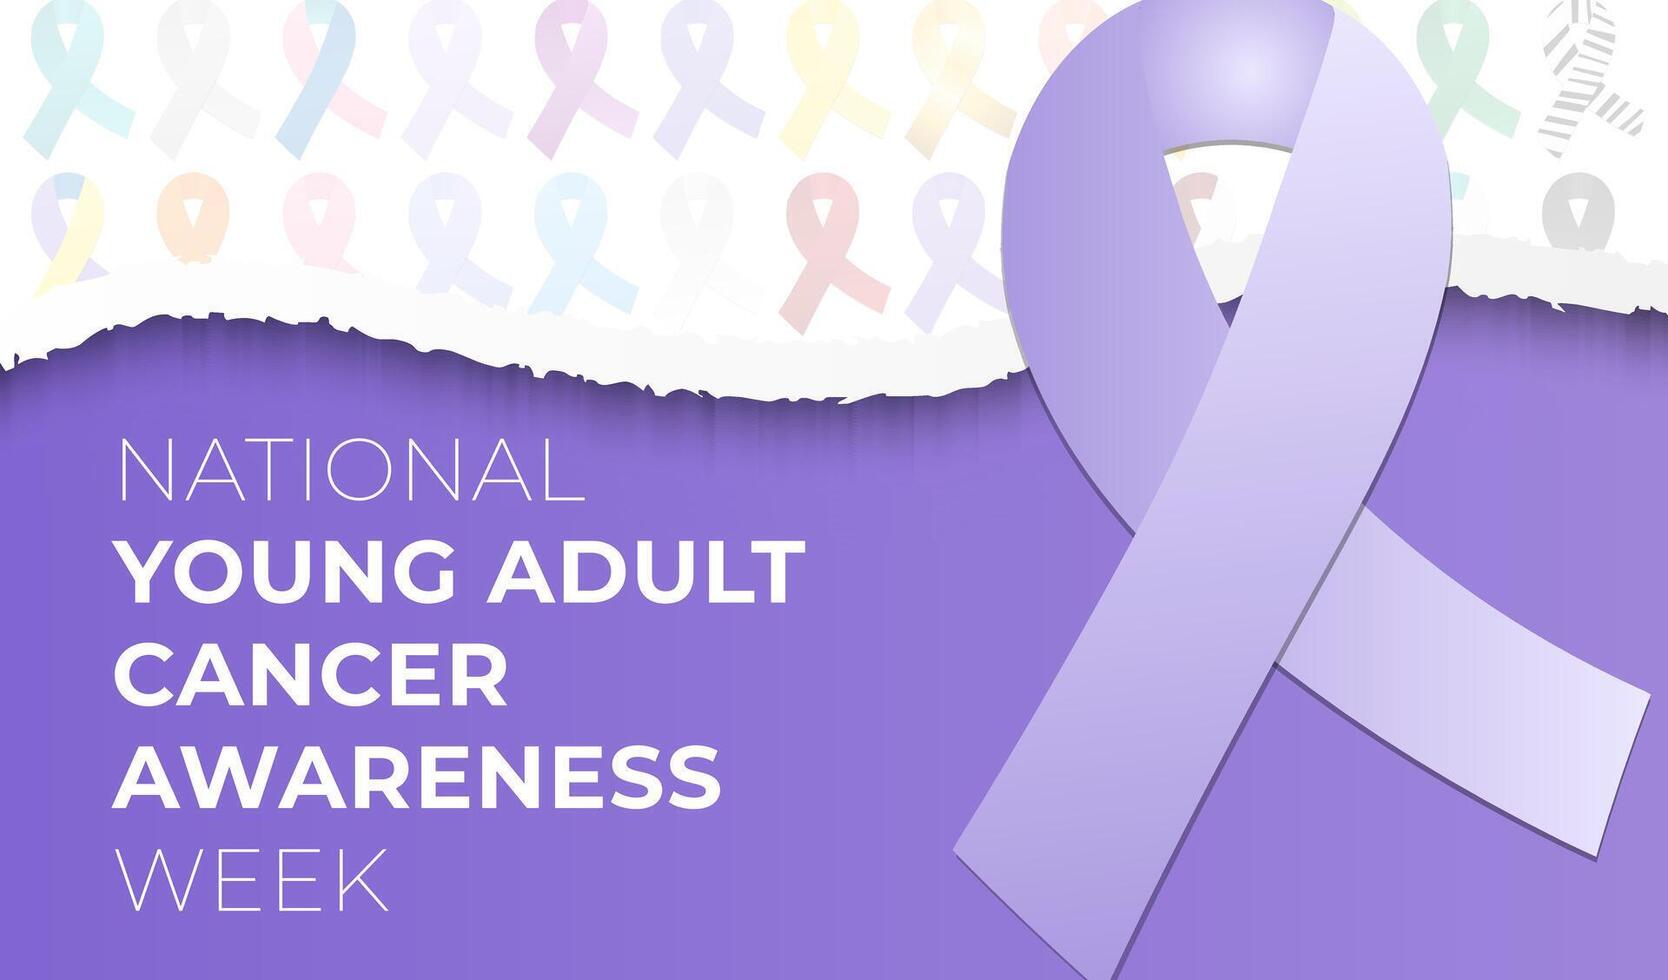 National Young Adult Cancer Awareness Week Background Illustration vector